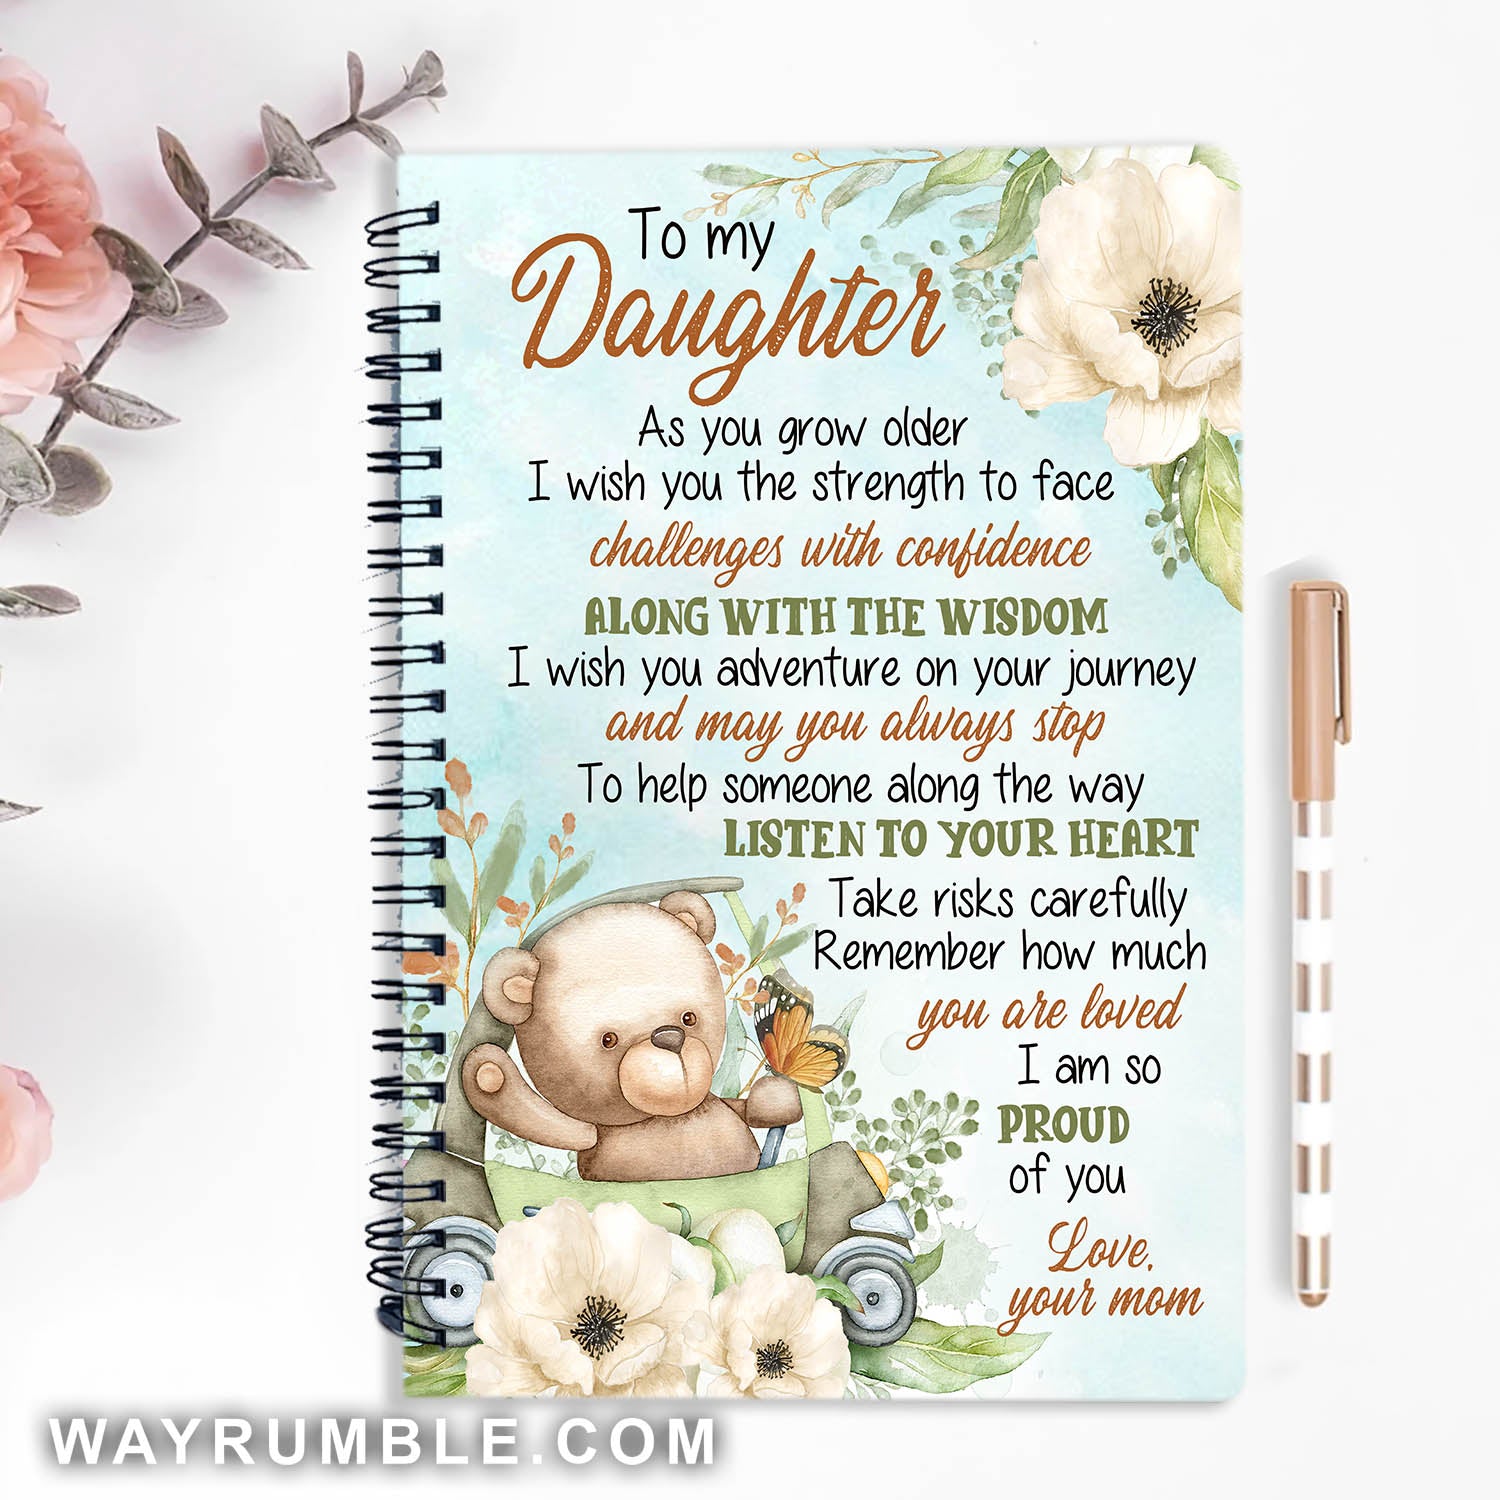 Mom to daughter, Teddy bear, White poppy flower, I am so proud of you - Family Spiral Journal